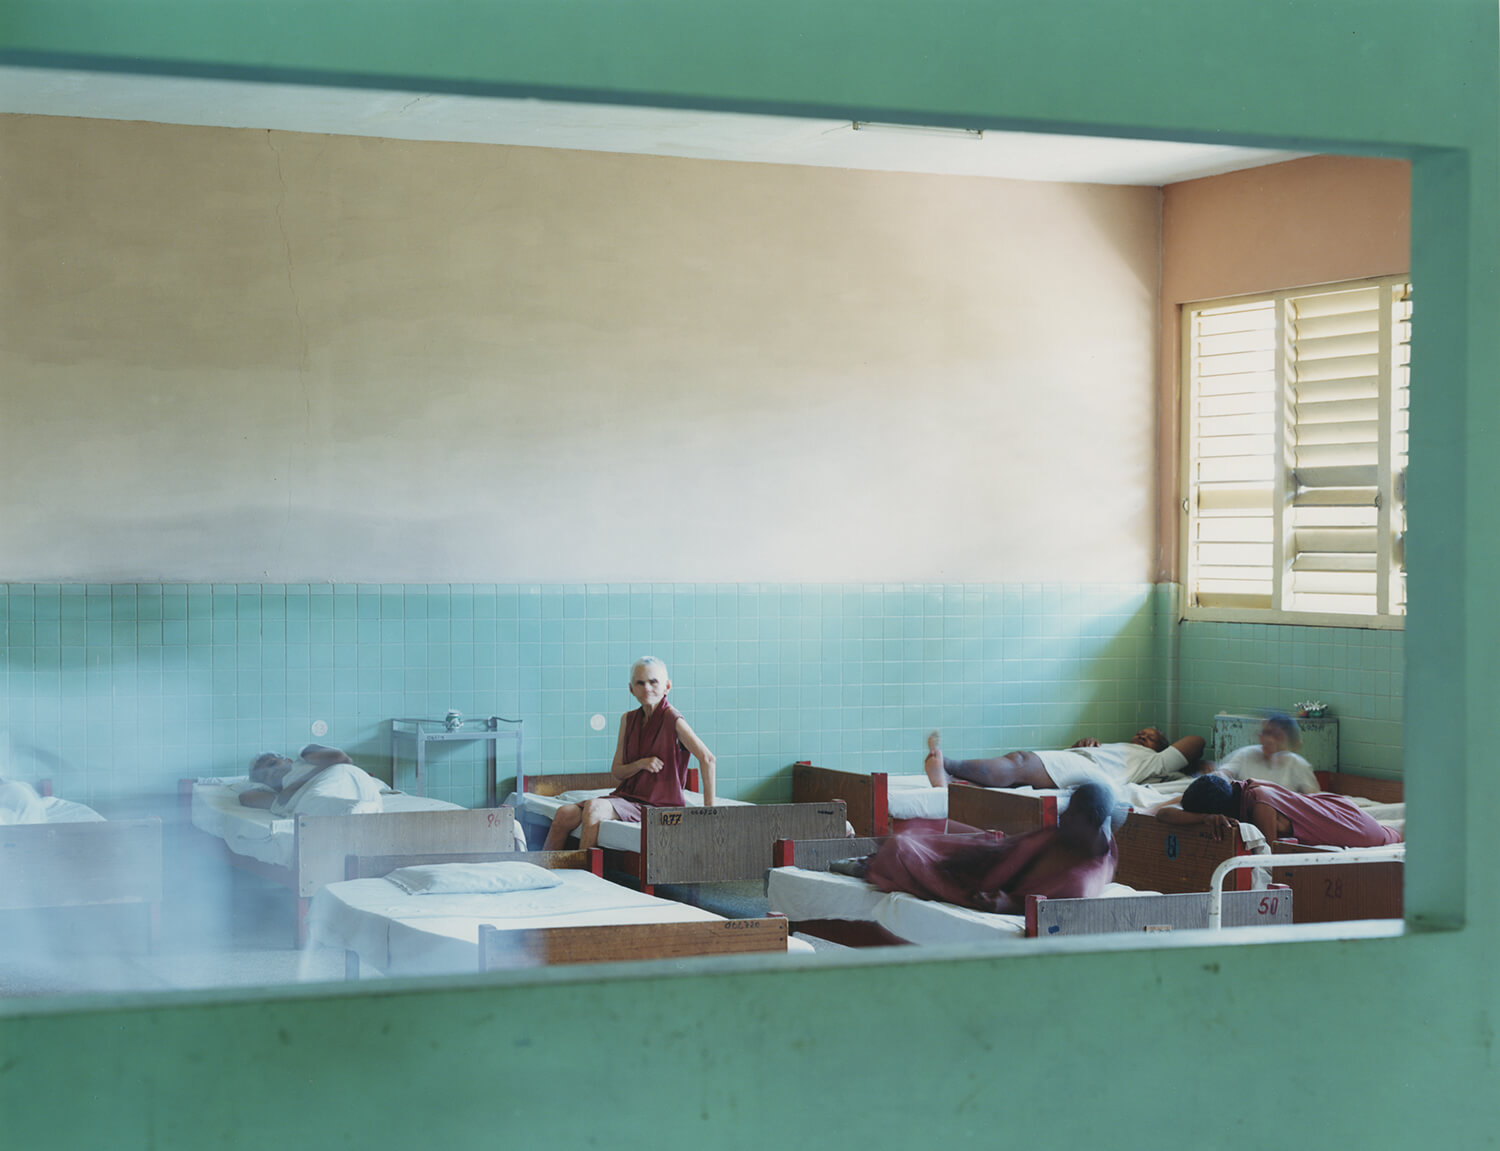  Rene Vallejo Psychiatric Hospital, Cuba, C-type print, 16 x 20 inches, 2003 